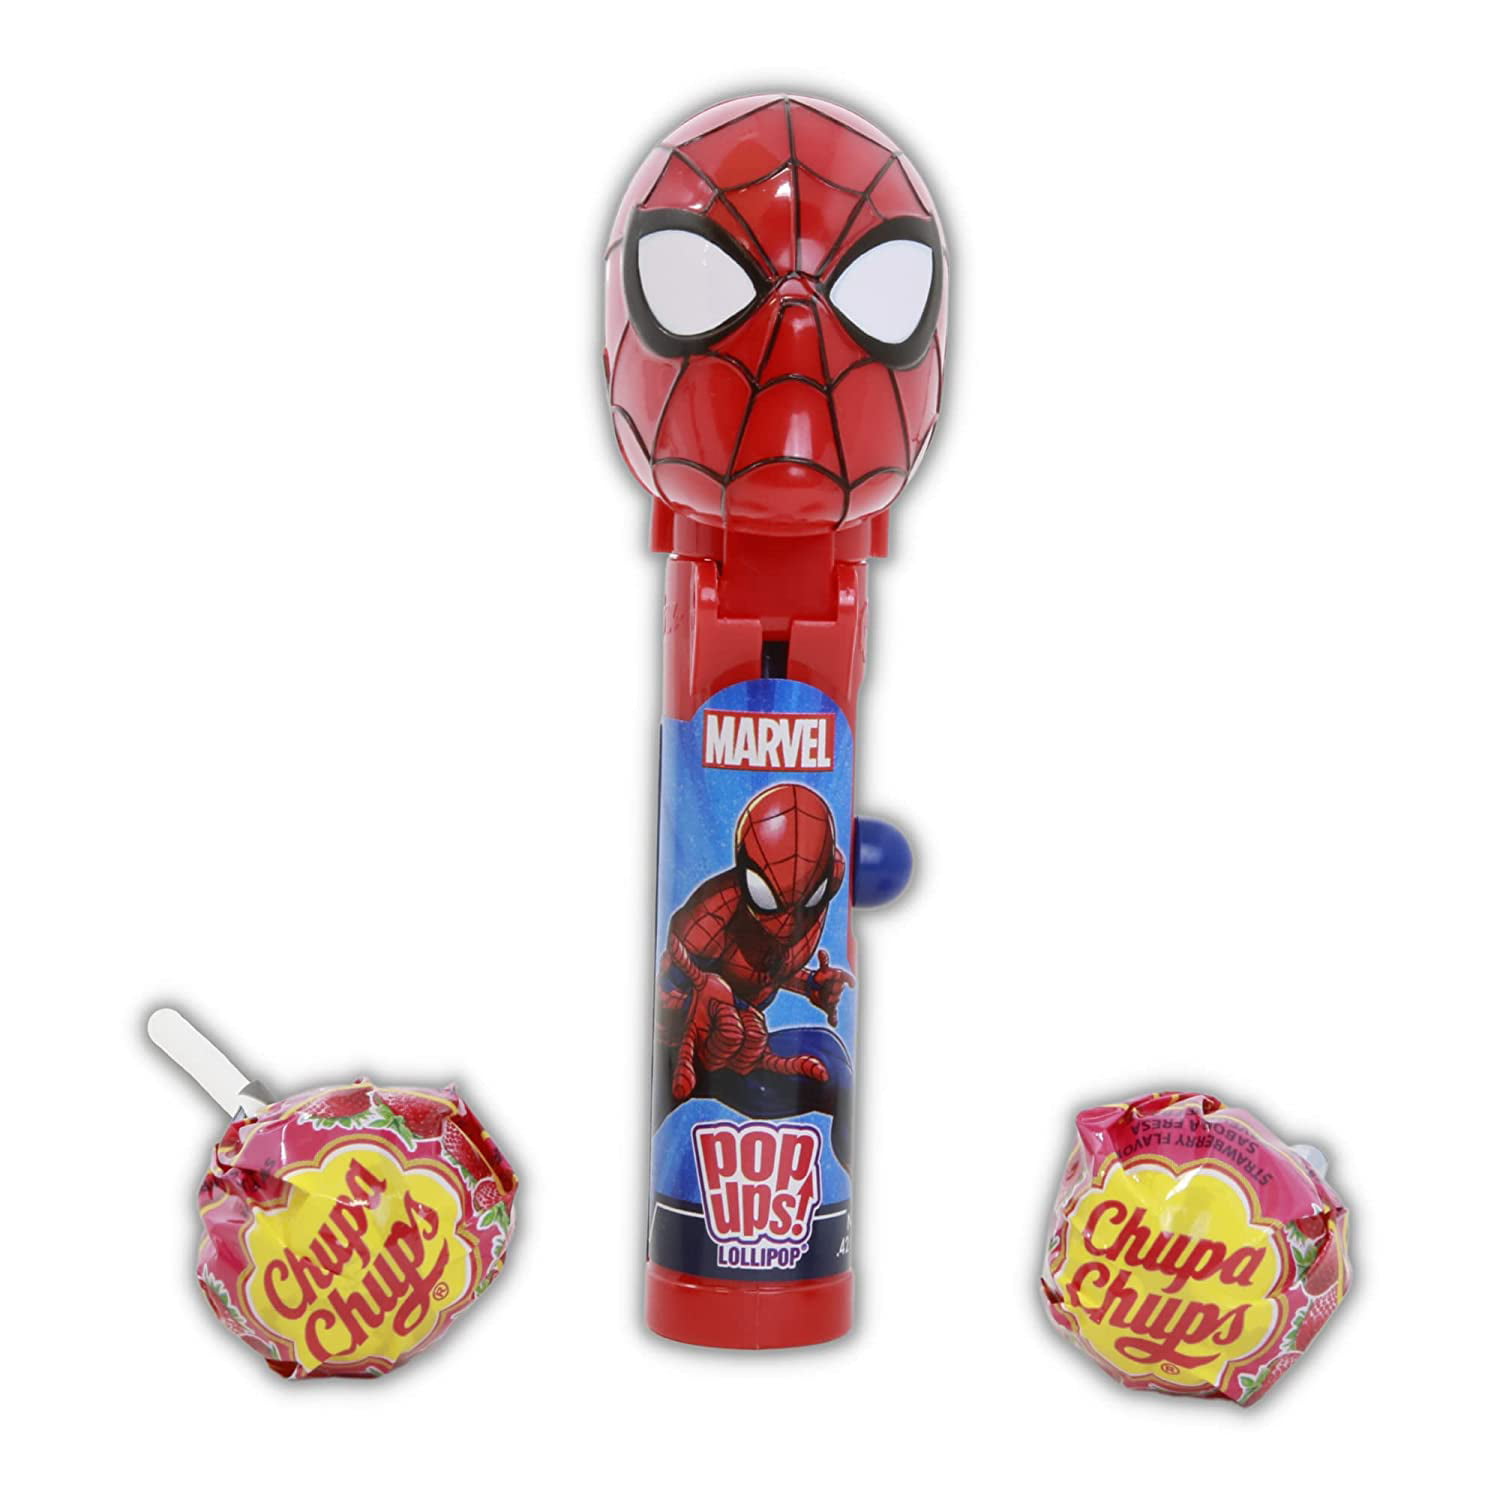 Valentine's Marvel Spiderman Pop Ups Gift Set 1.41 oz. - All City Candy